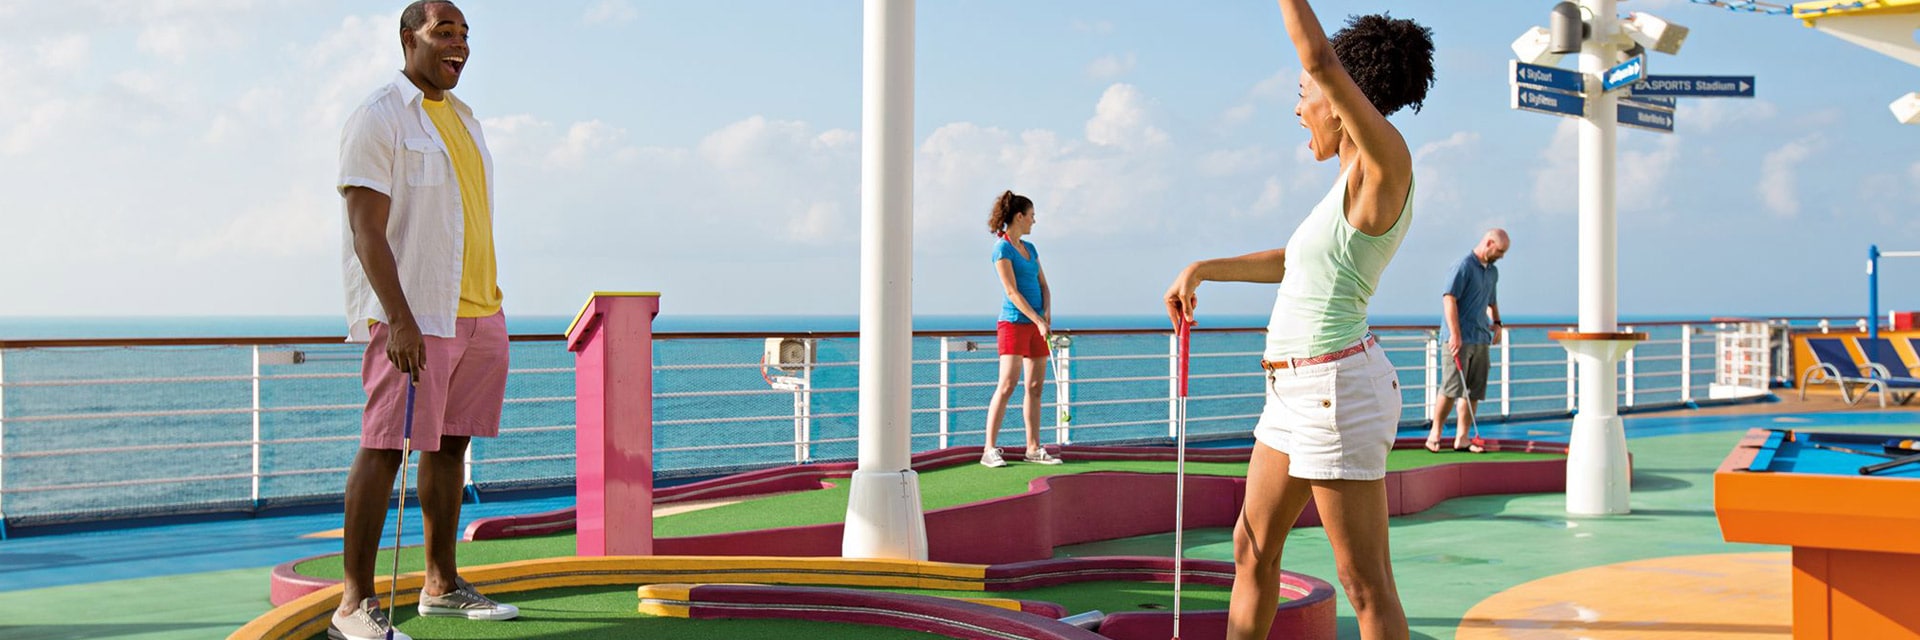 Guests enjoying a fun game of mini golf onboard their carnival cruise